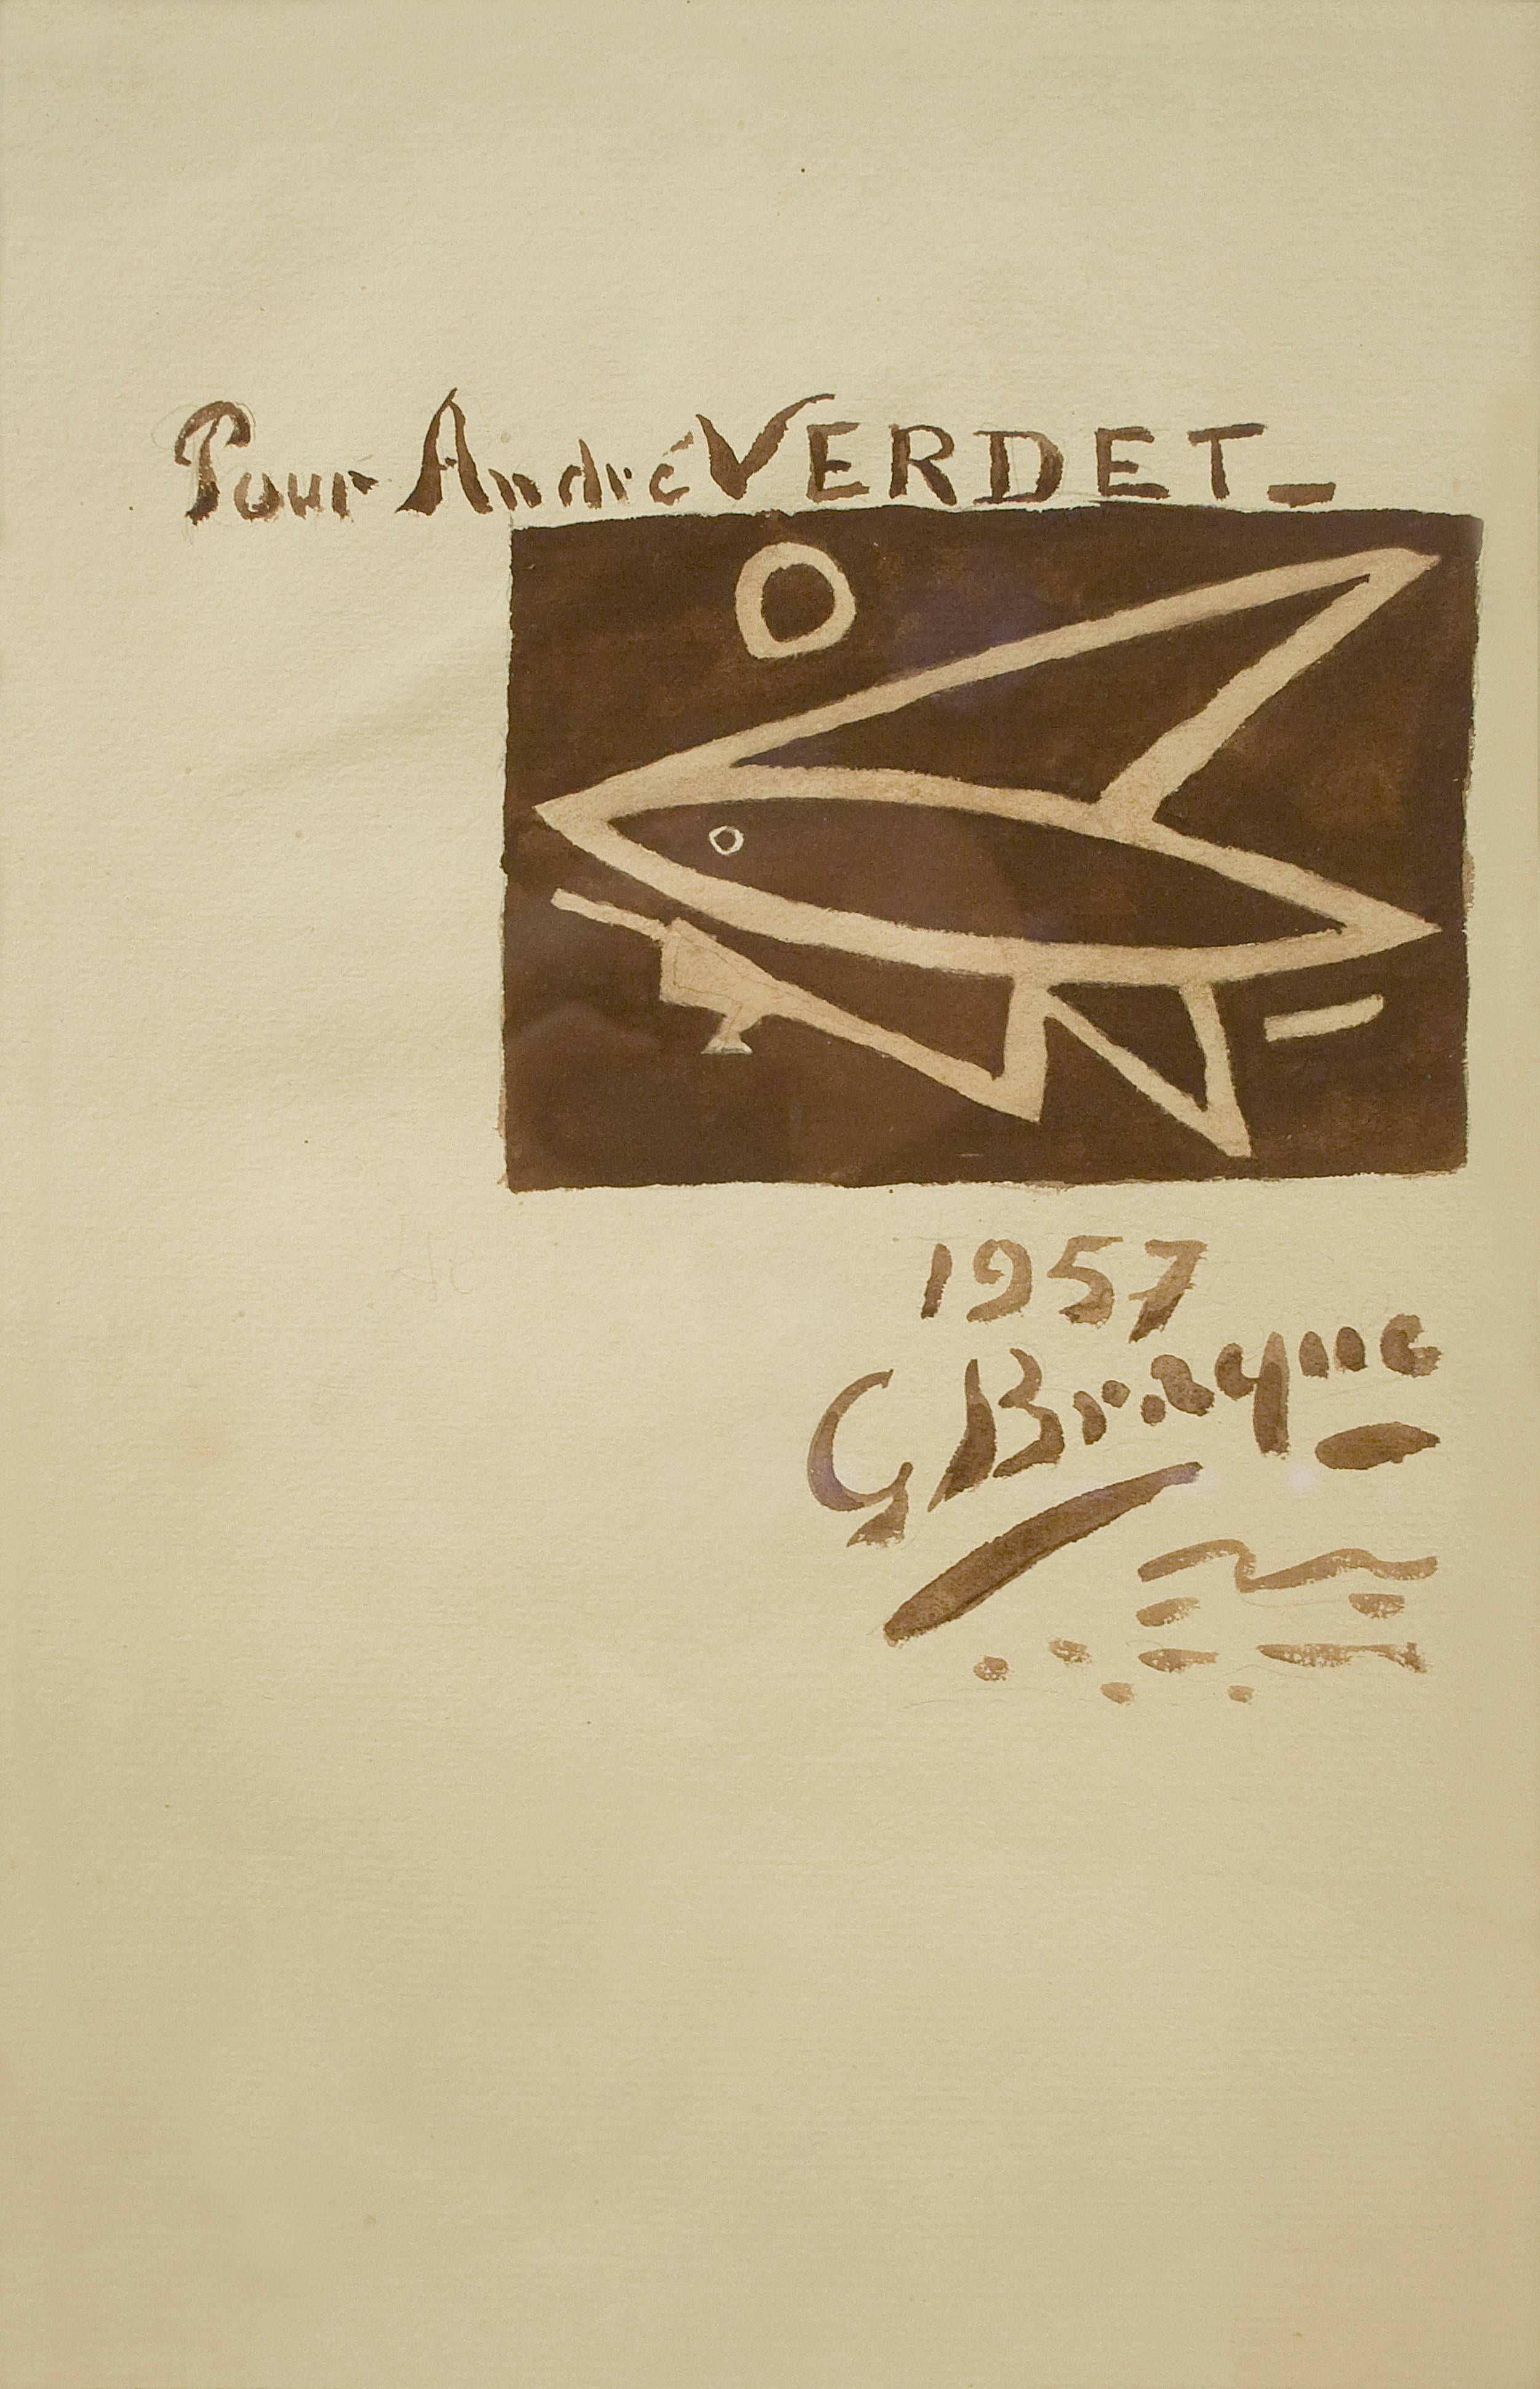 Watercolor by Georges Braque (1882-1963) “Composition au Poisson” 
Provenance: Collection: André Verdet, Nice enchères SARL, catalogue p7, collection André Verdet.
Literature: André Verdet lived in Saint-Paul de Vence from 1918-2004.
His friends